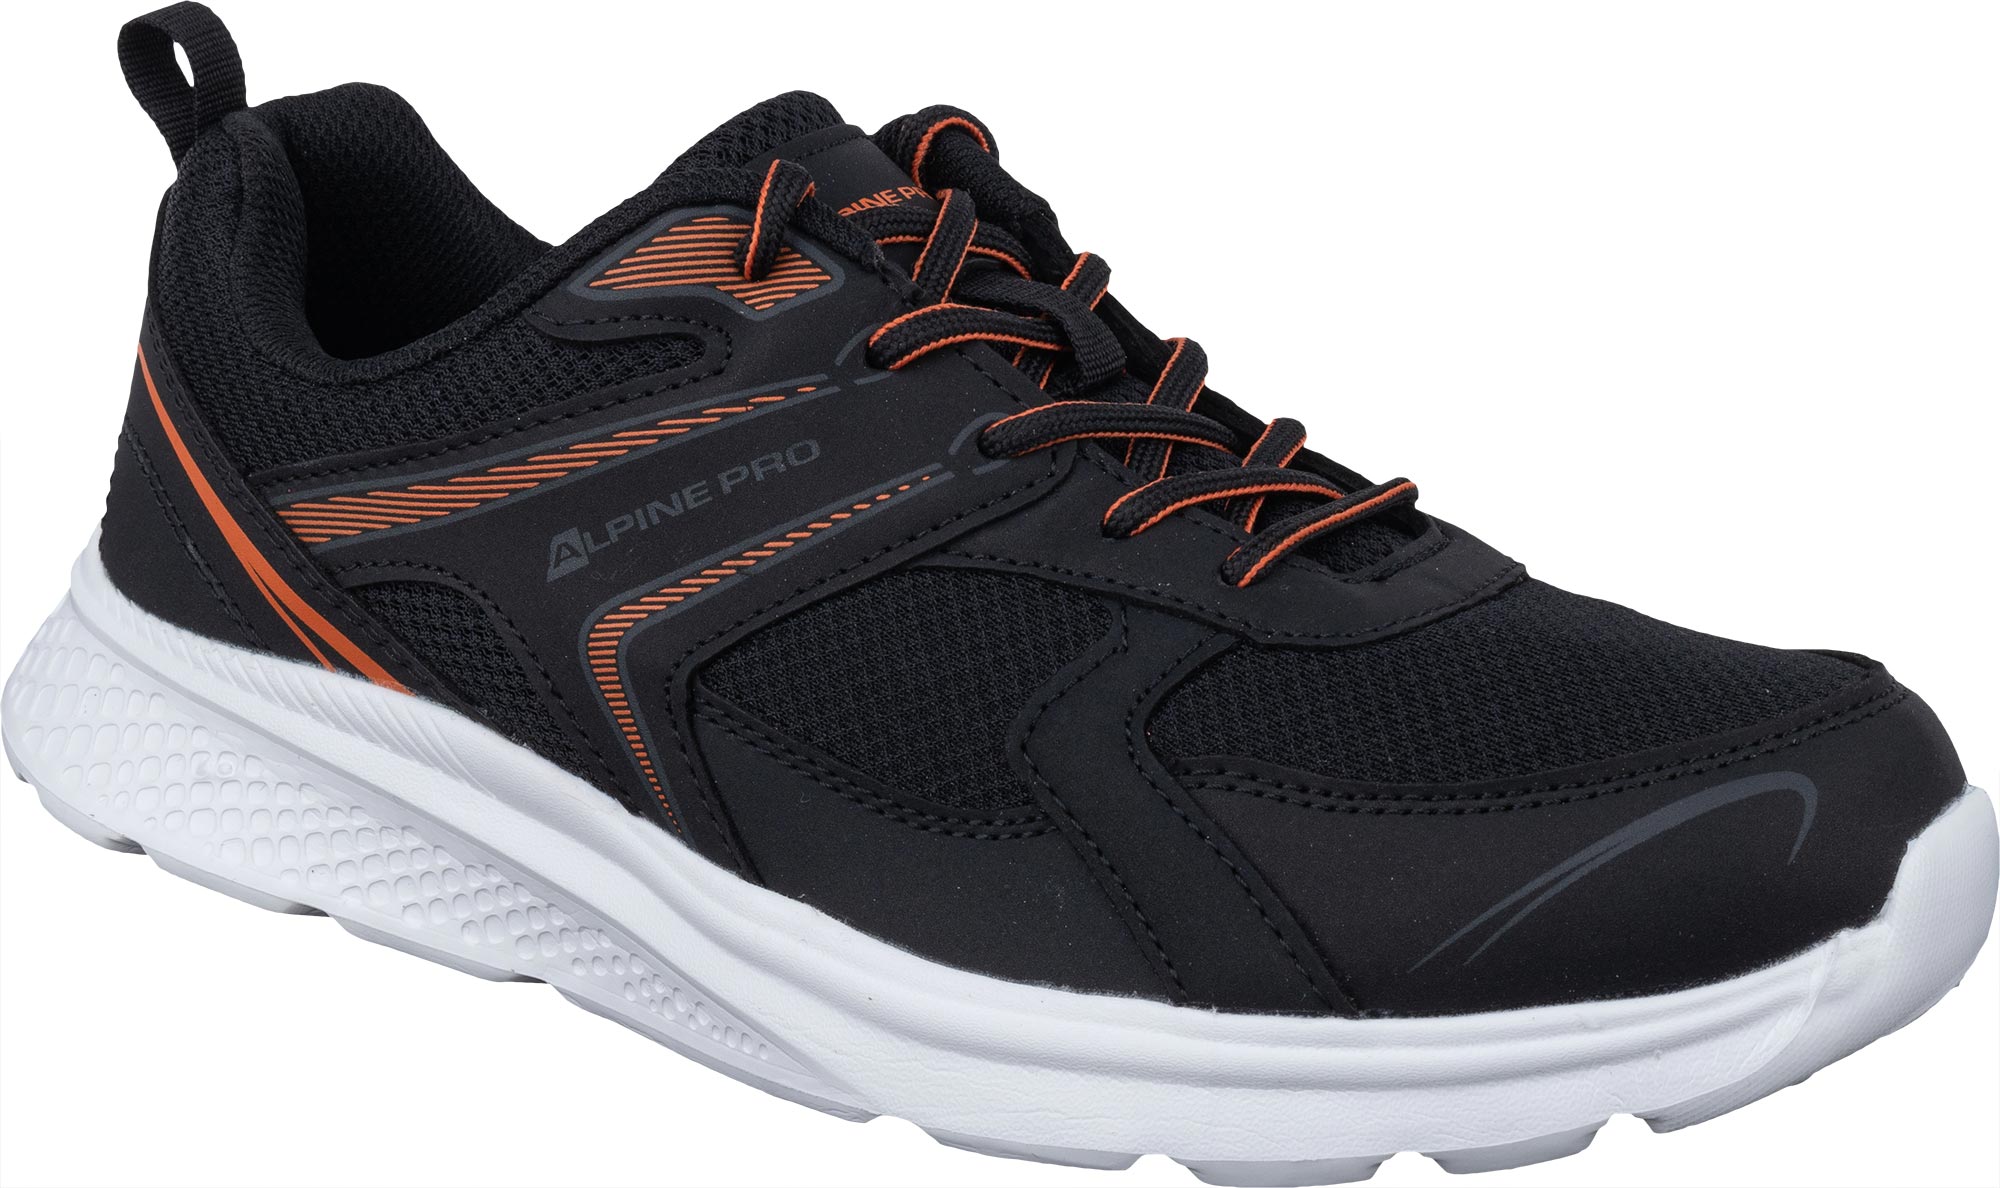 Unisex sports shoes